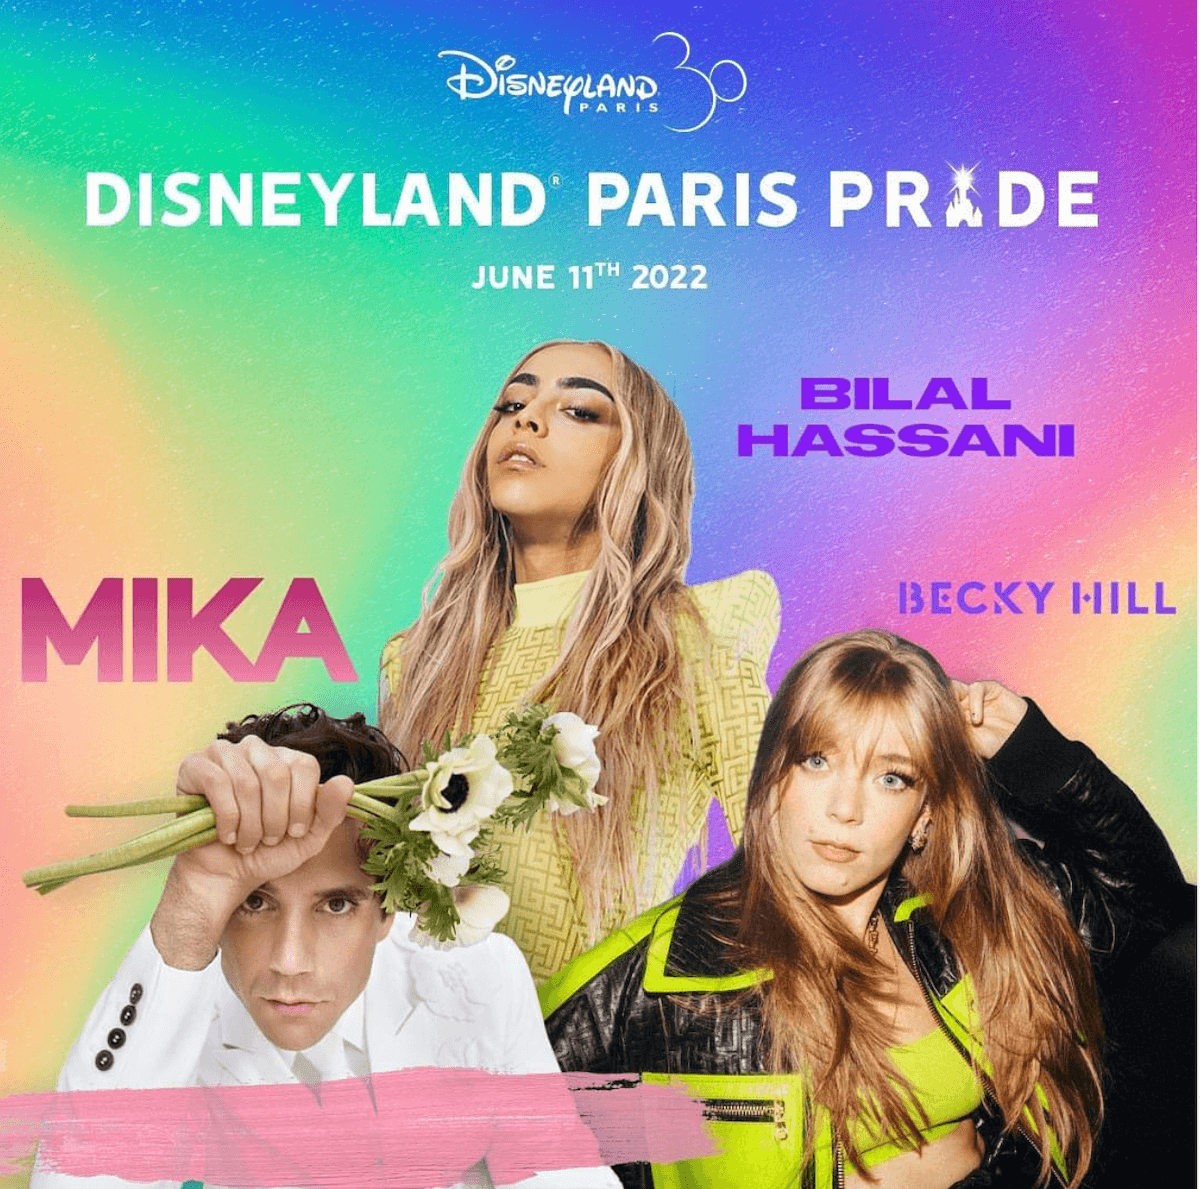 Disneyland Paris Pride 2022: ospiti Mika, Becky Hill e Bilal Hassani - Disneyland Paris - Gay.it